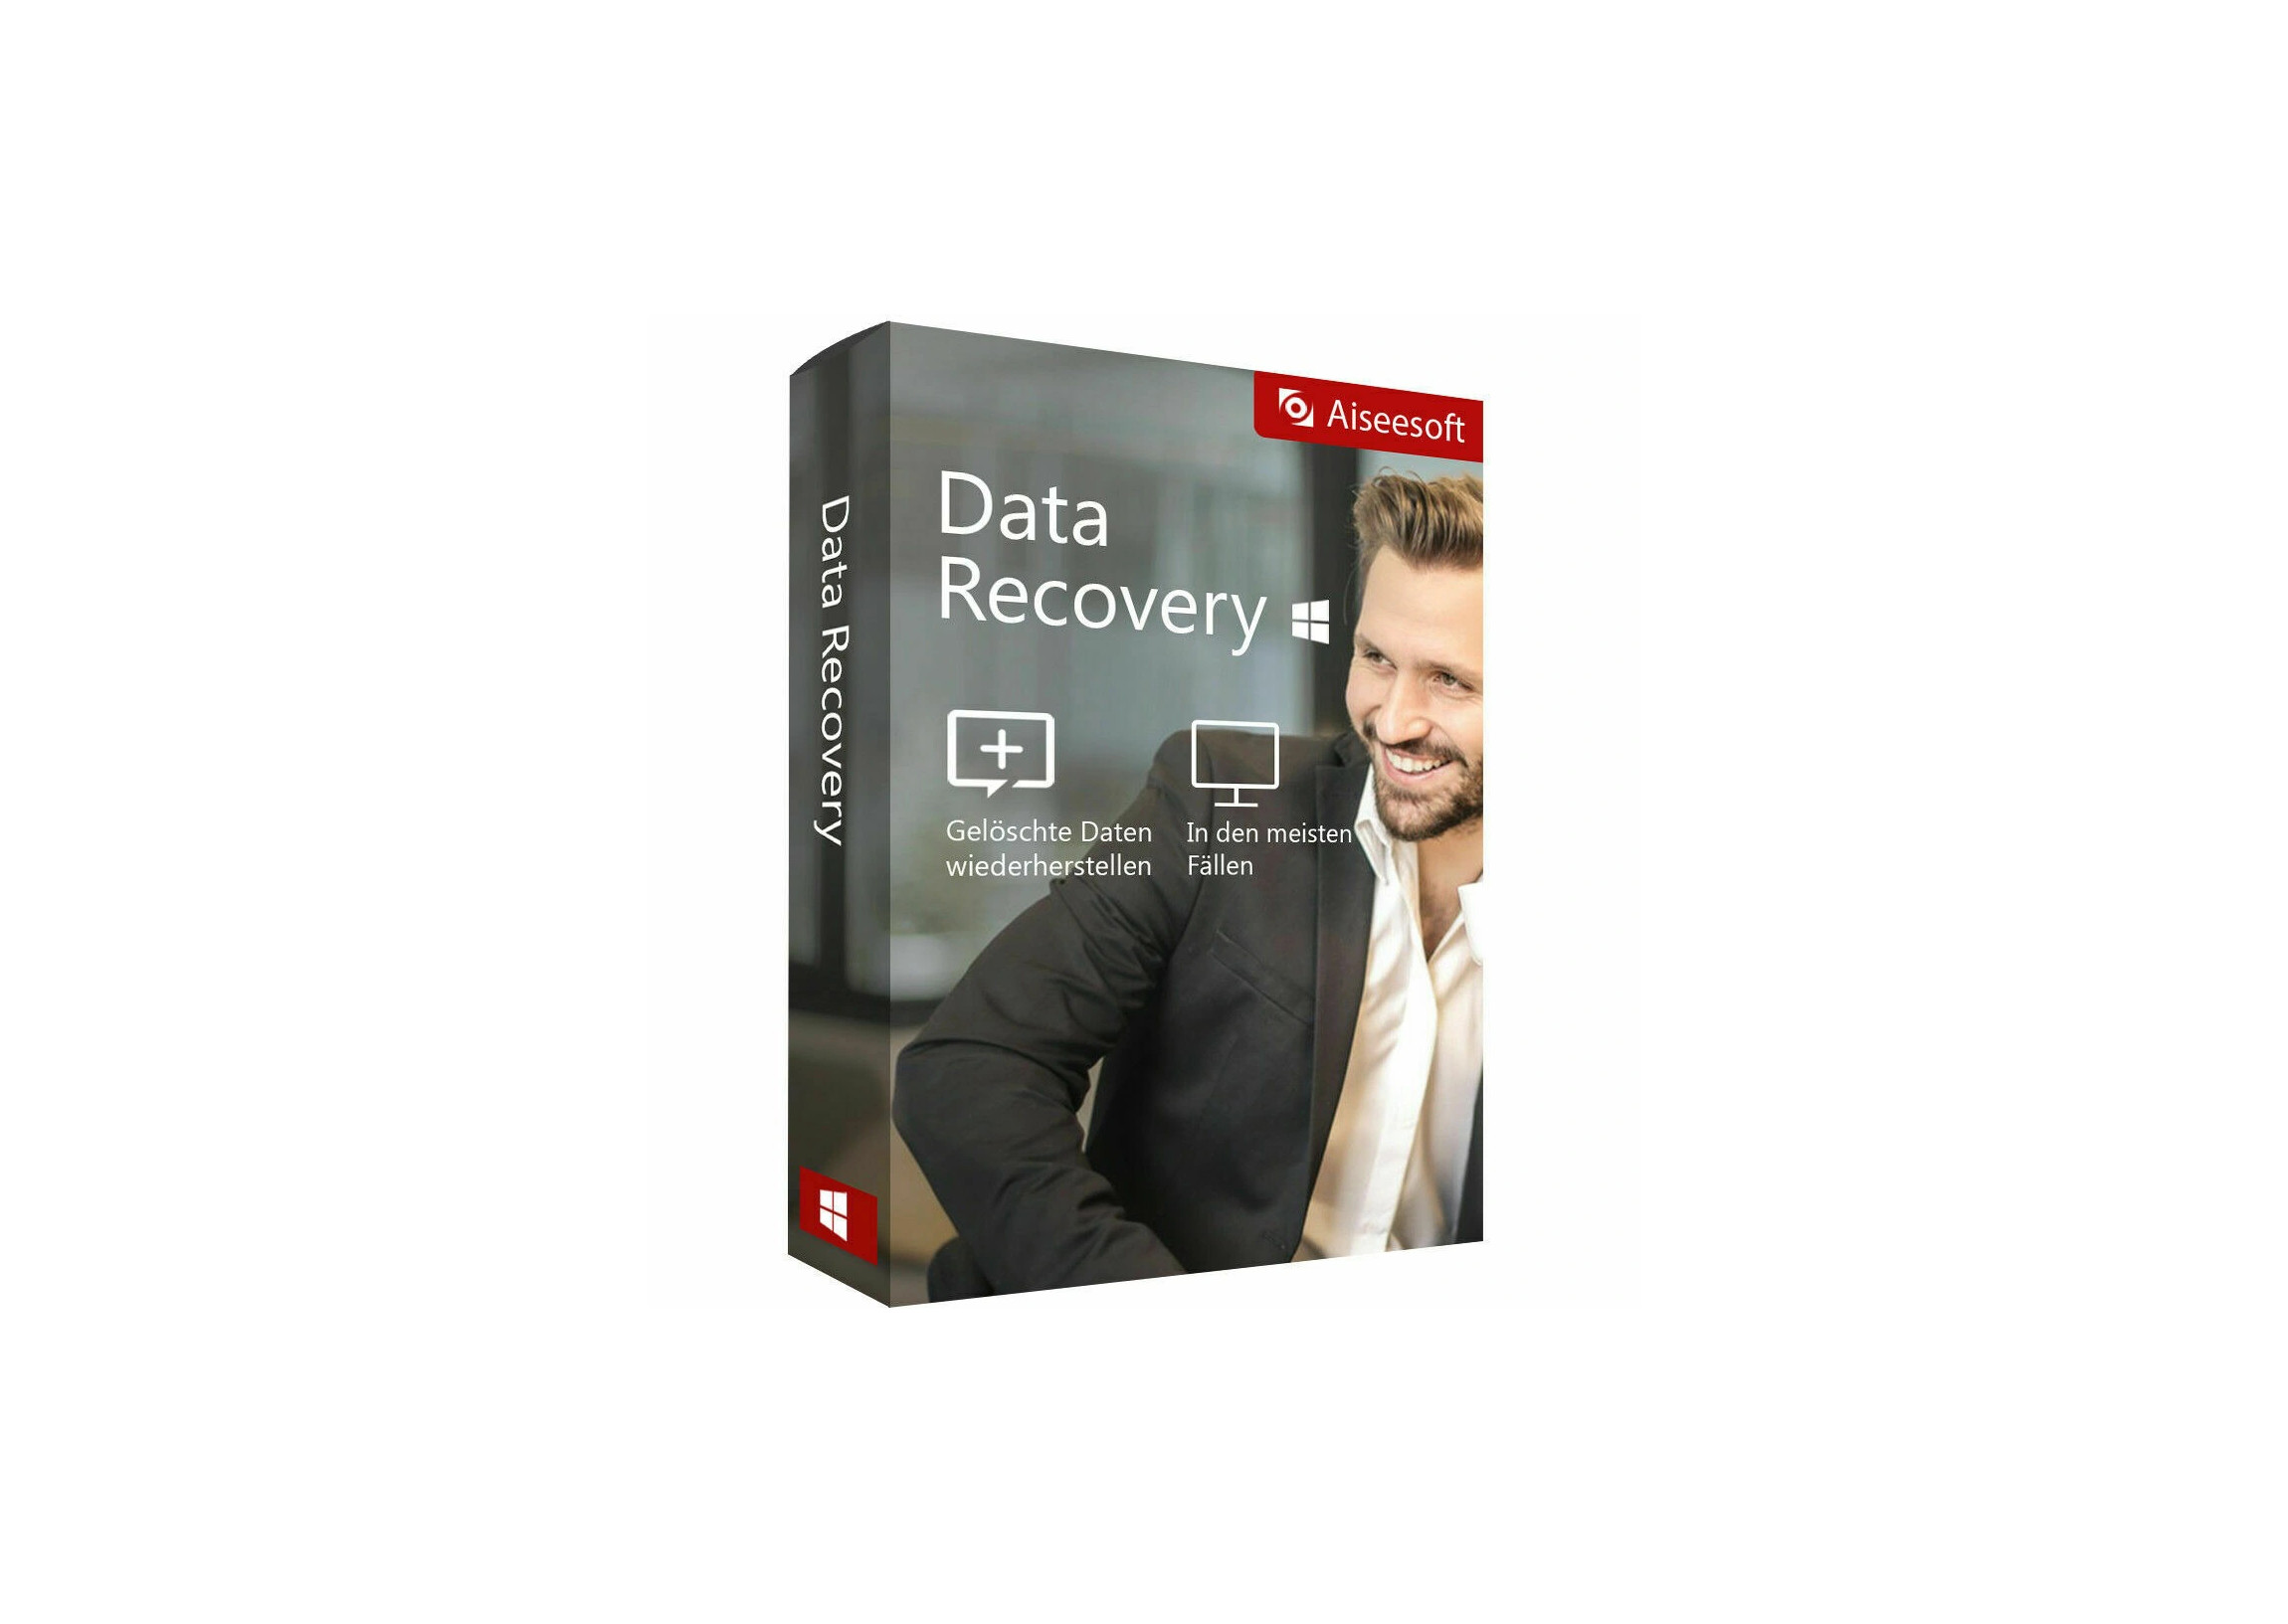 Aiseesoft Data Recovery Key (1 Year / 1 PC) [USD 2.25]